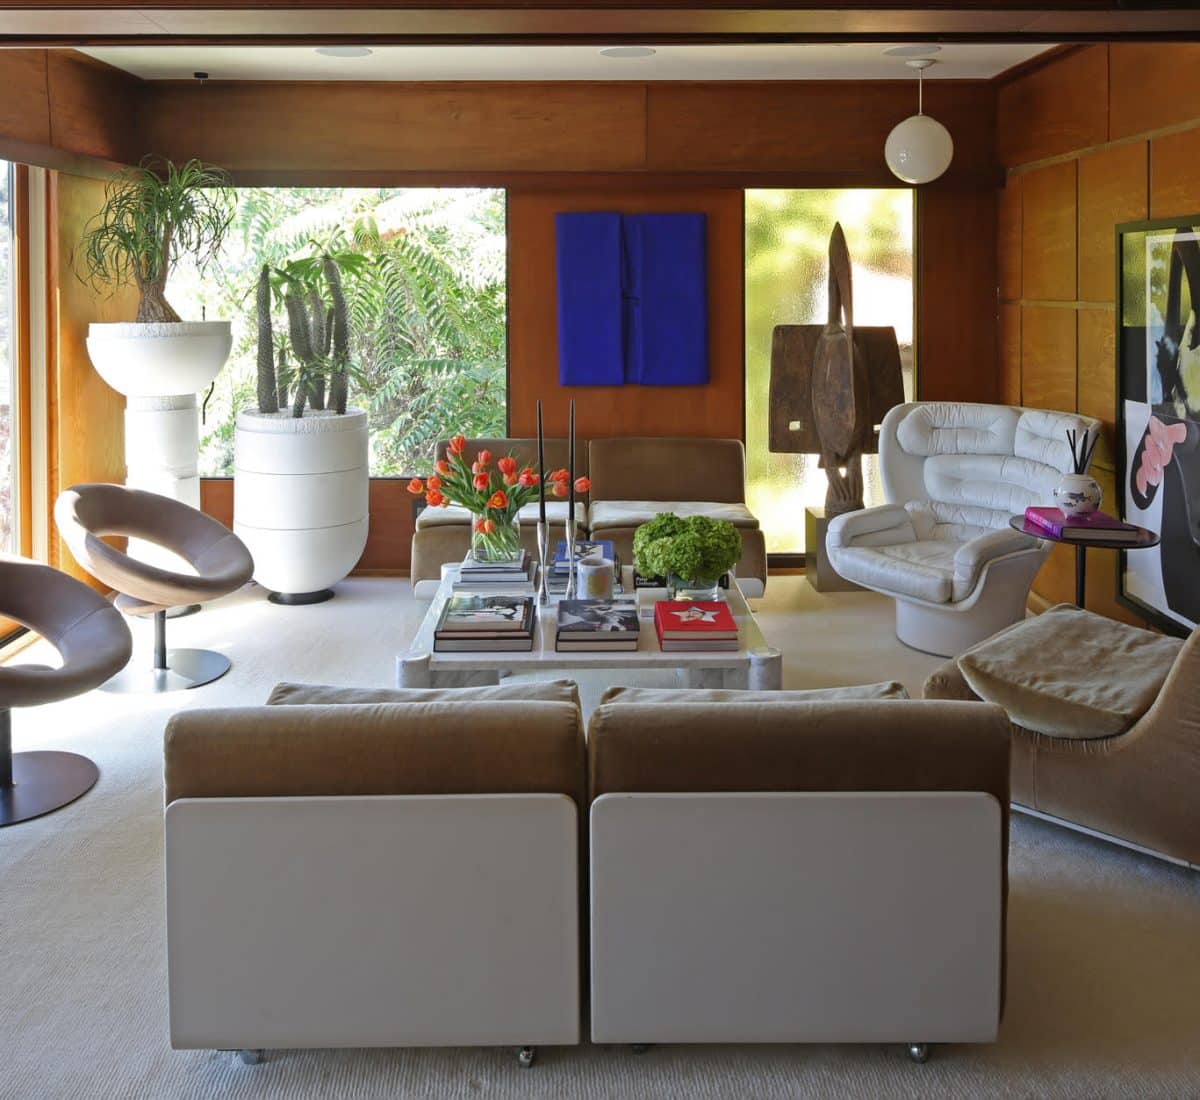 The living room of Giampiero Tagliaferri's home in L.A.'s Silver Lake neighborhood